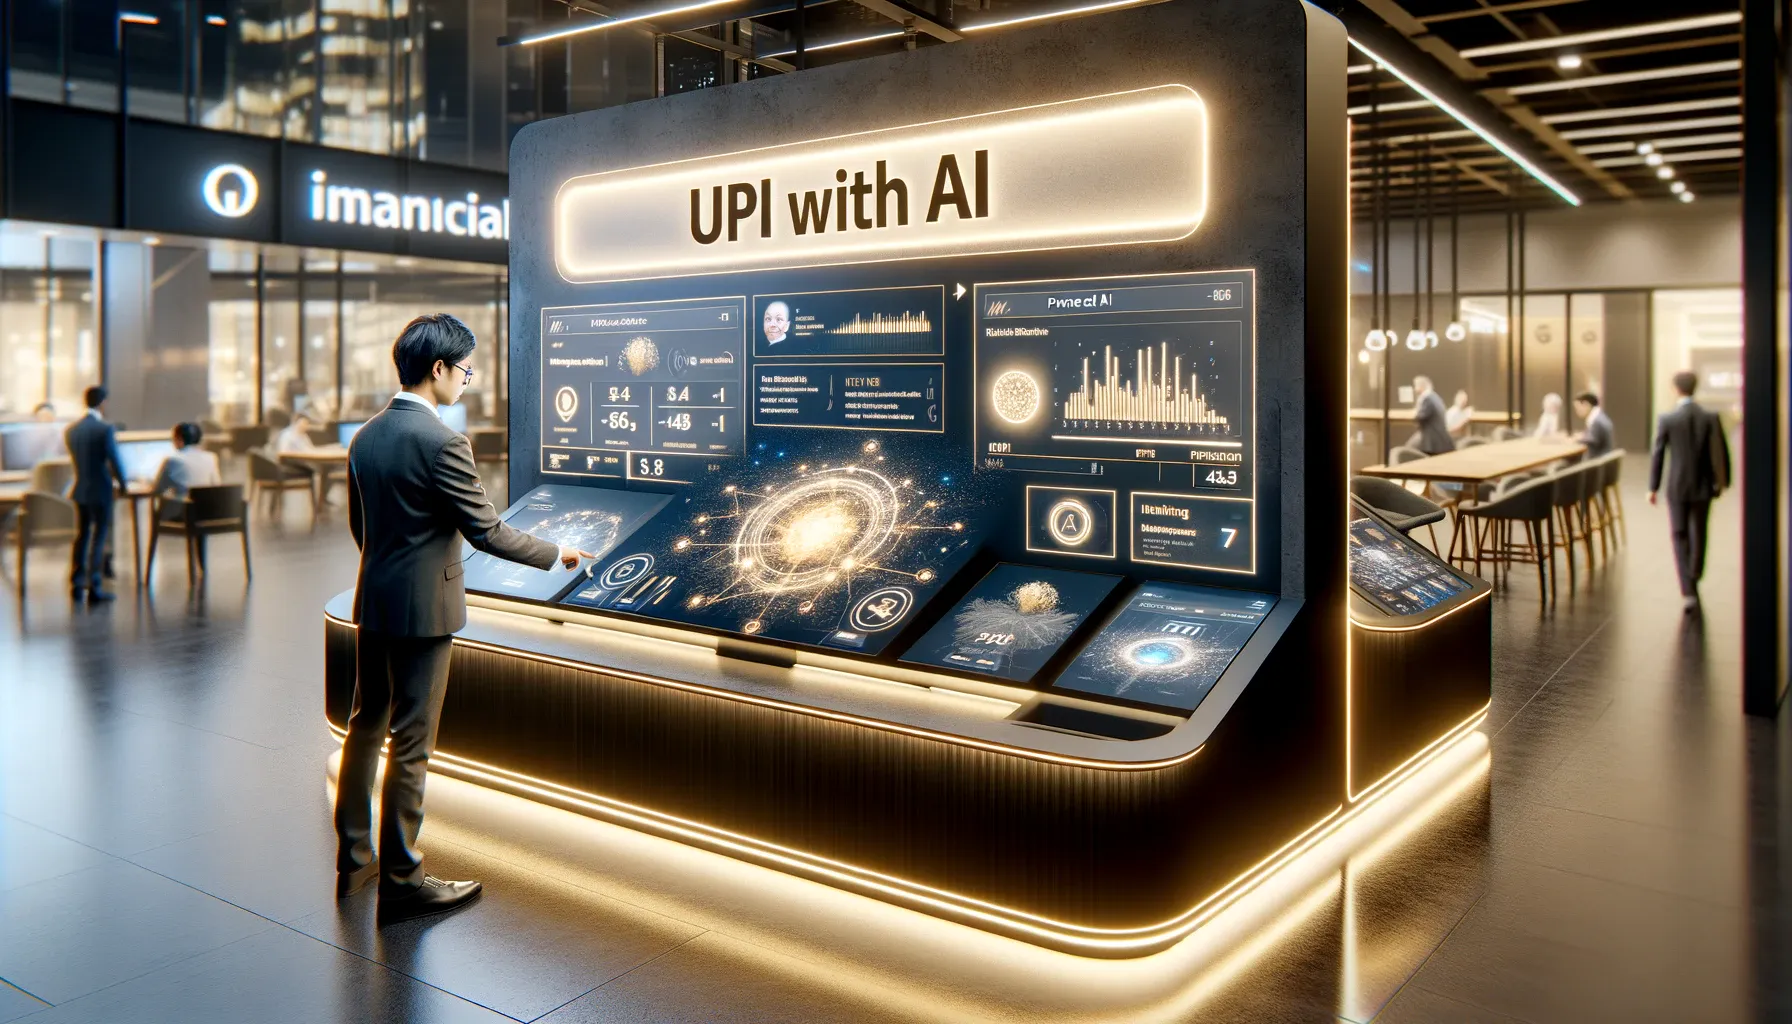 UPI with AI Security